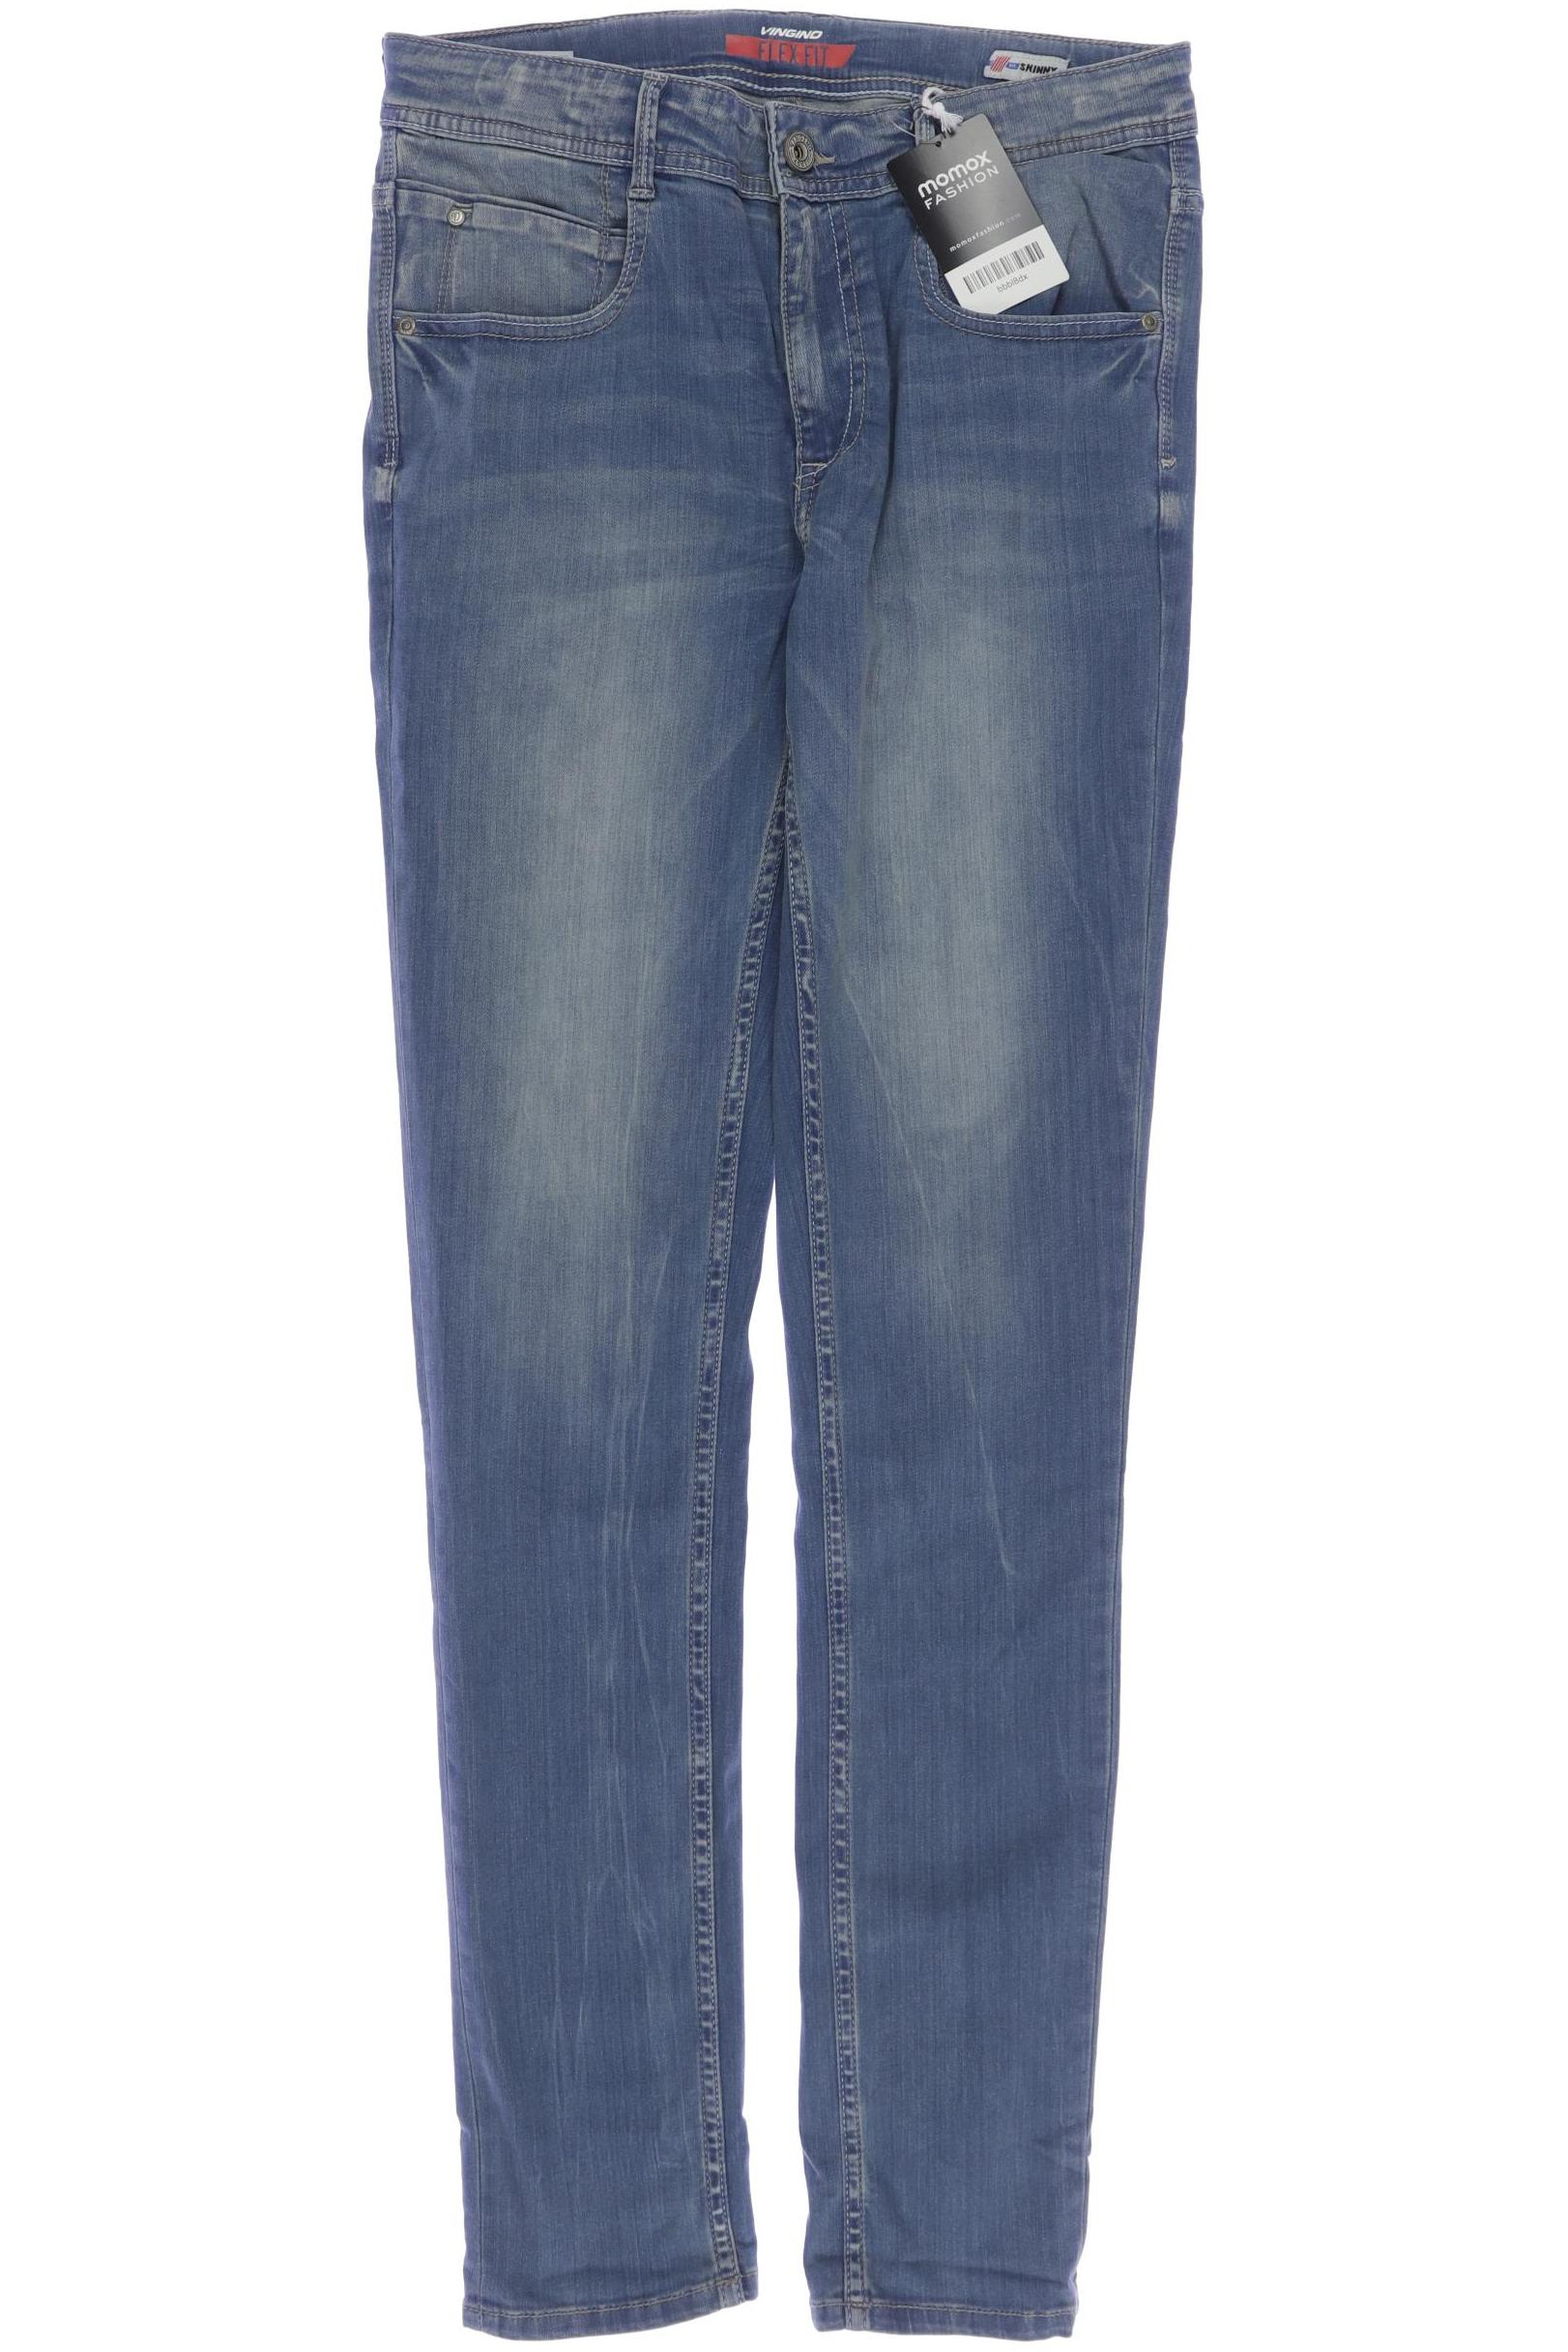 Vingino Damen Jeans, blau, Gr. 176 von VINGINO